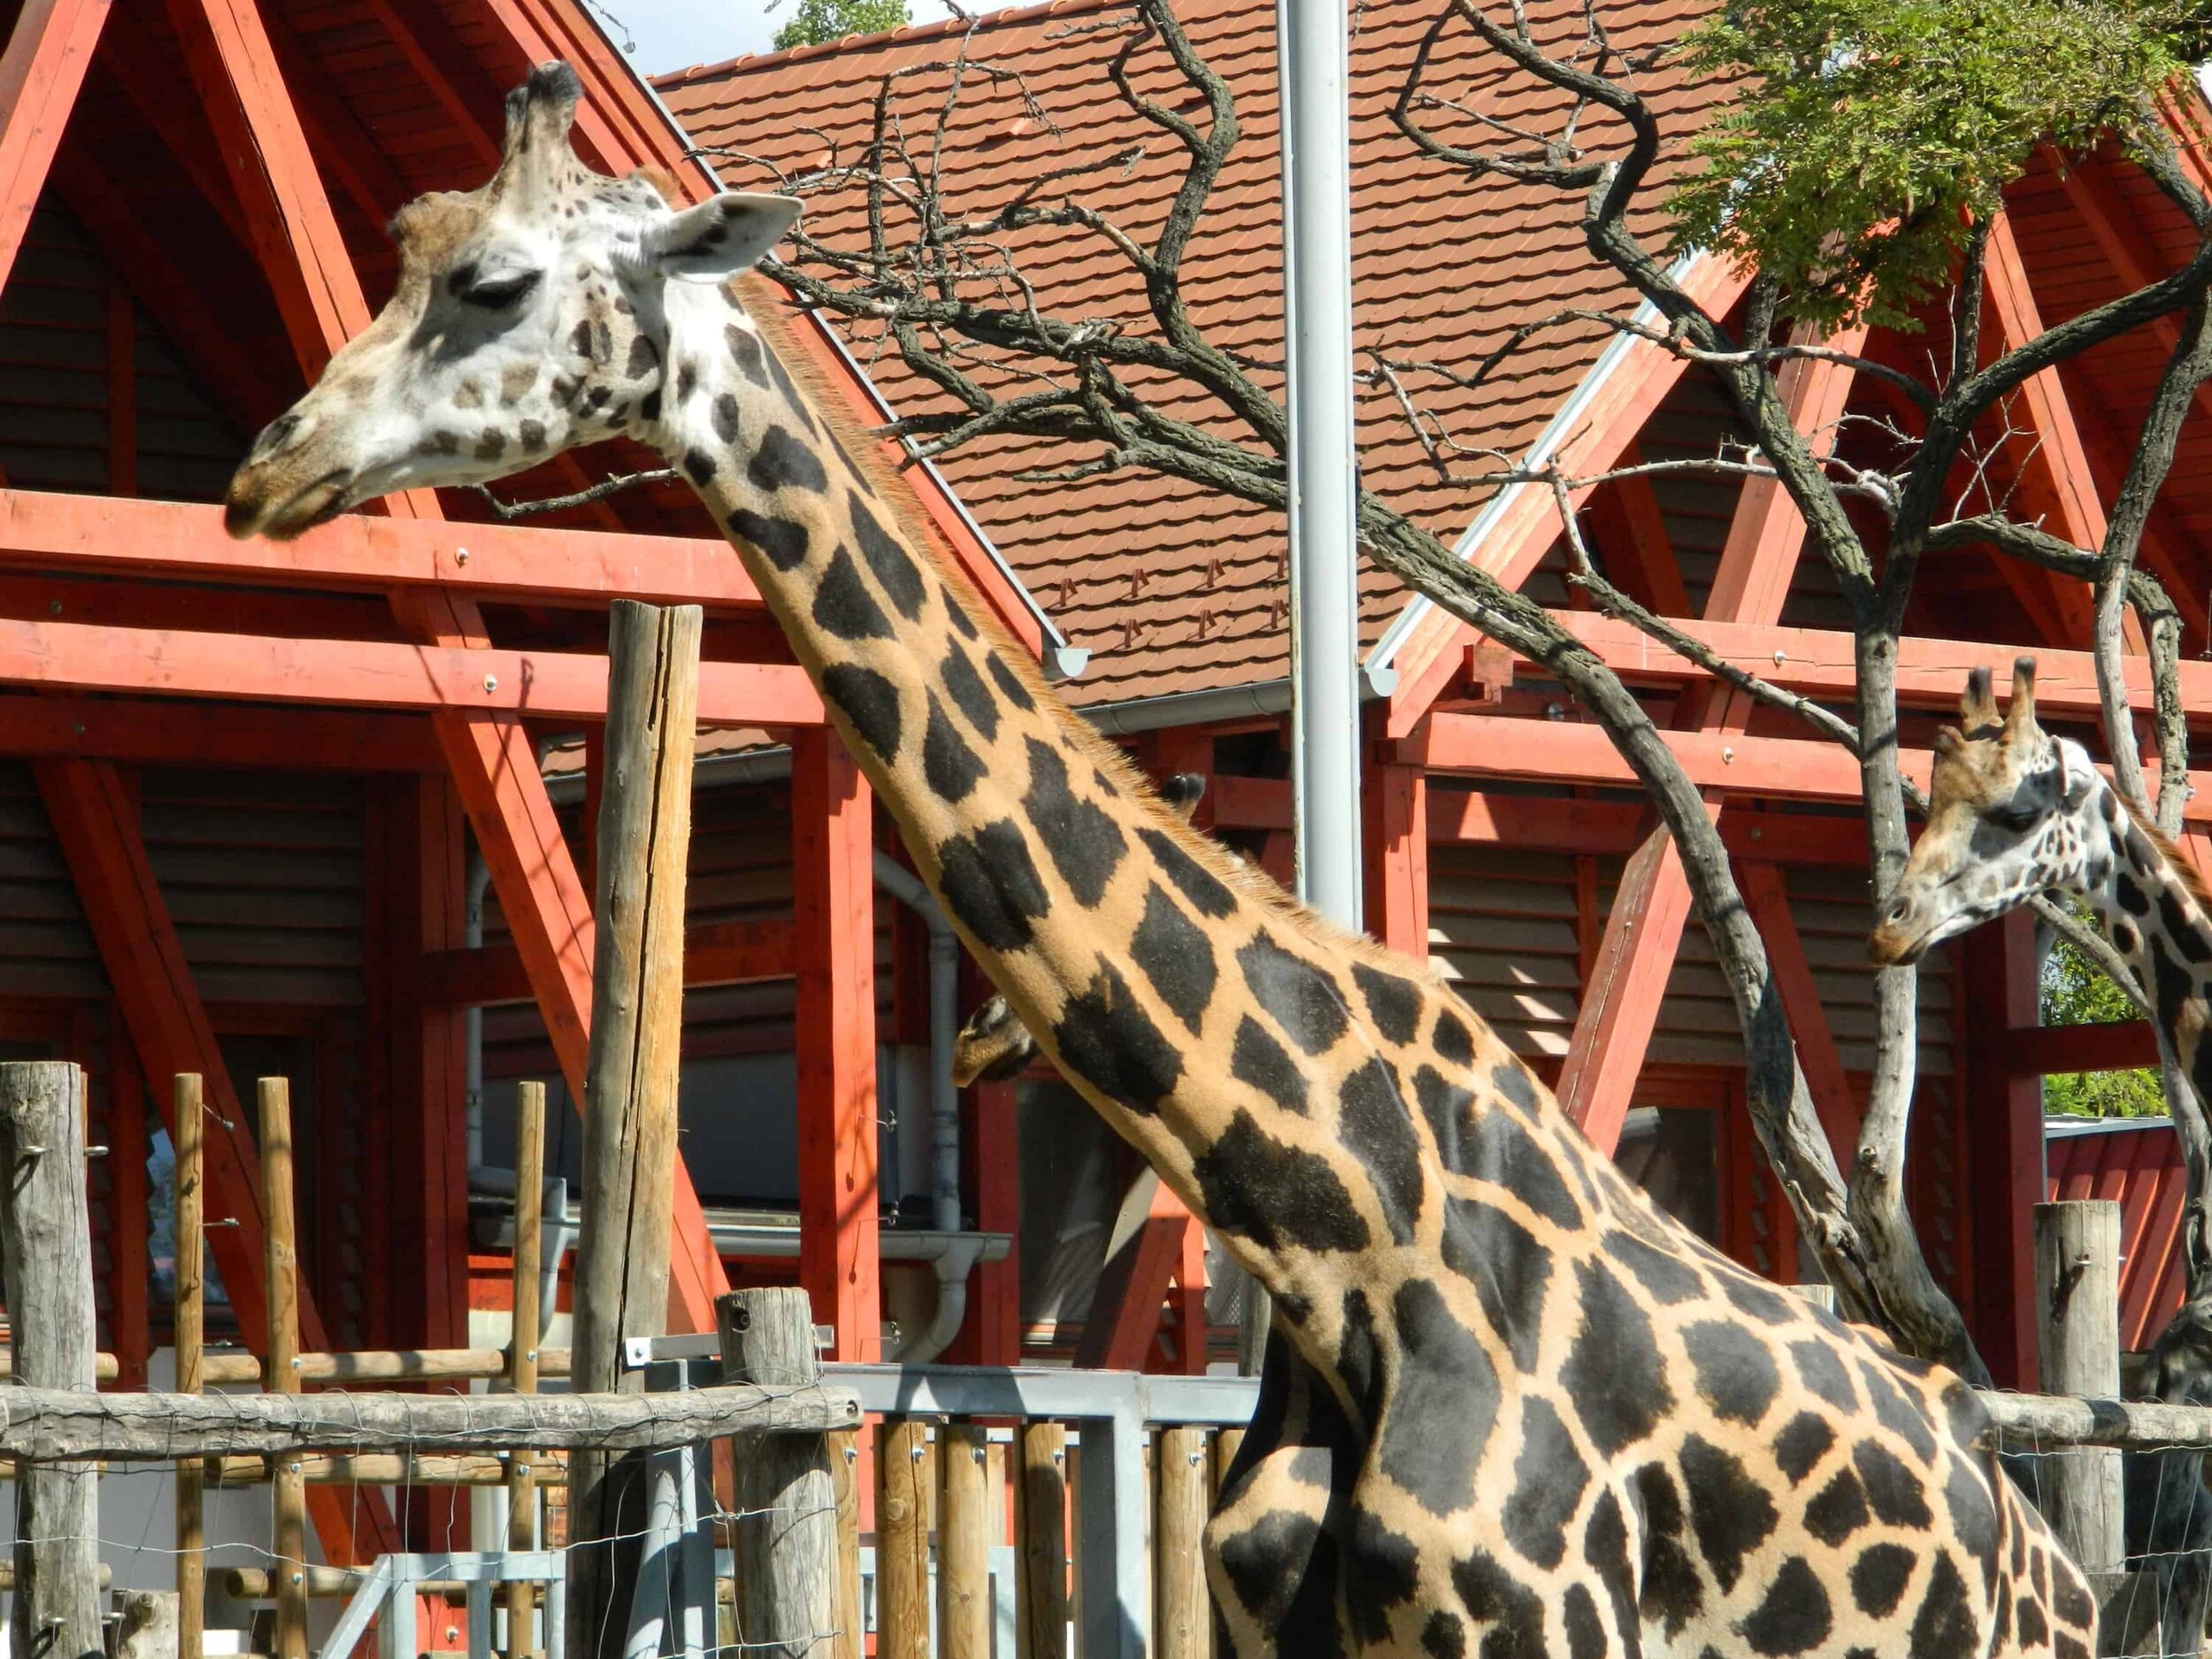 Giraffe close up at Budapest Zoo